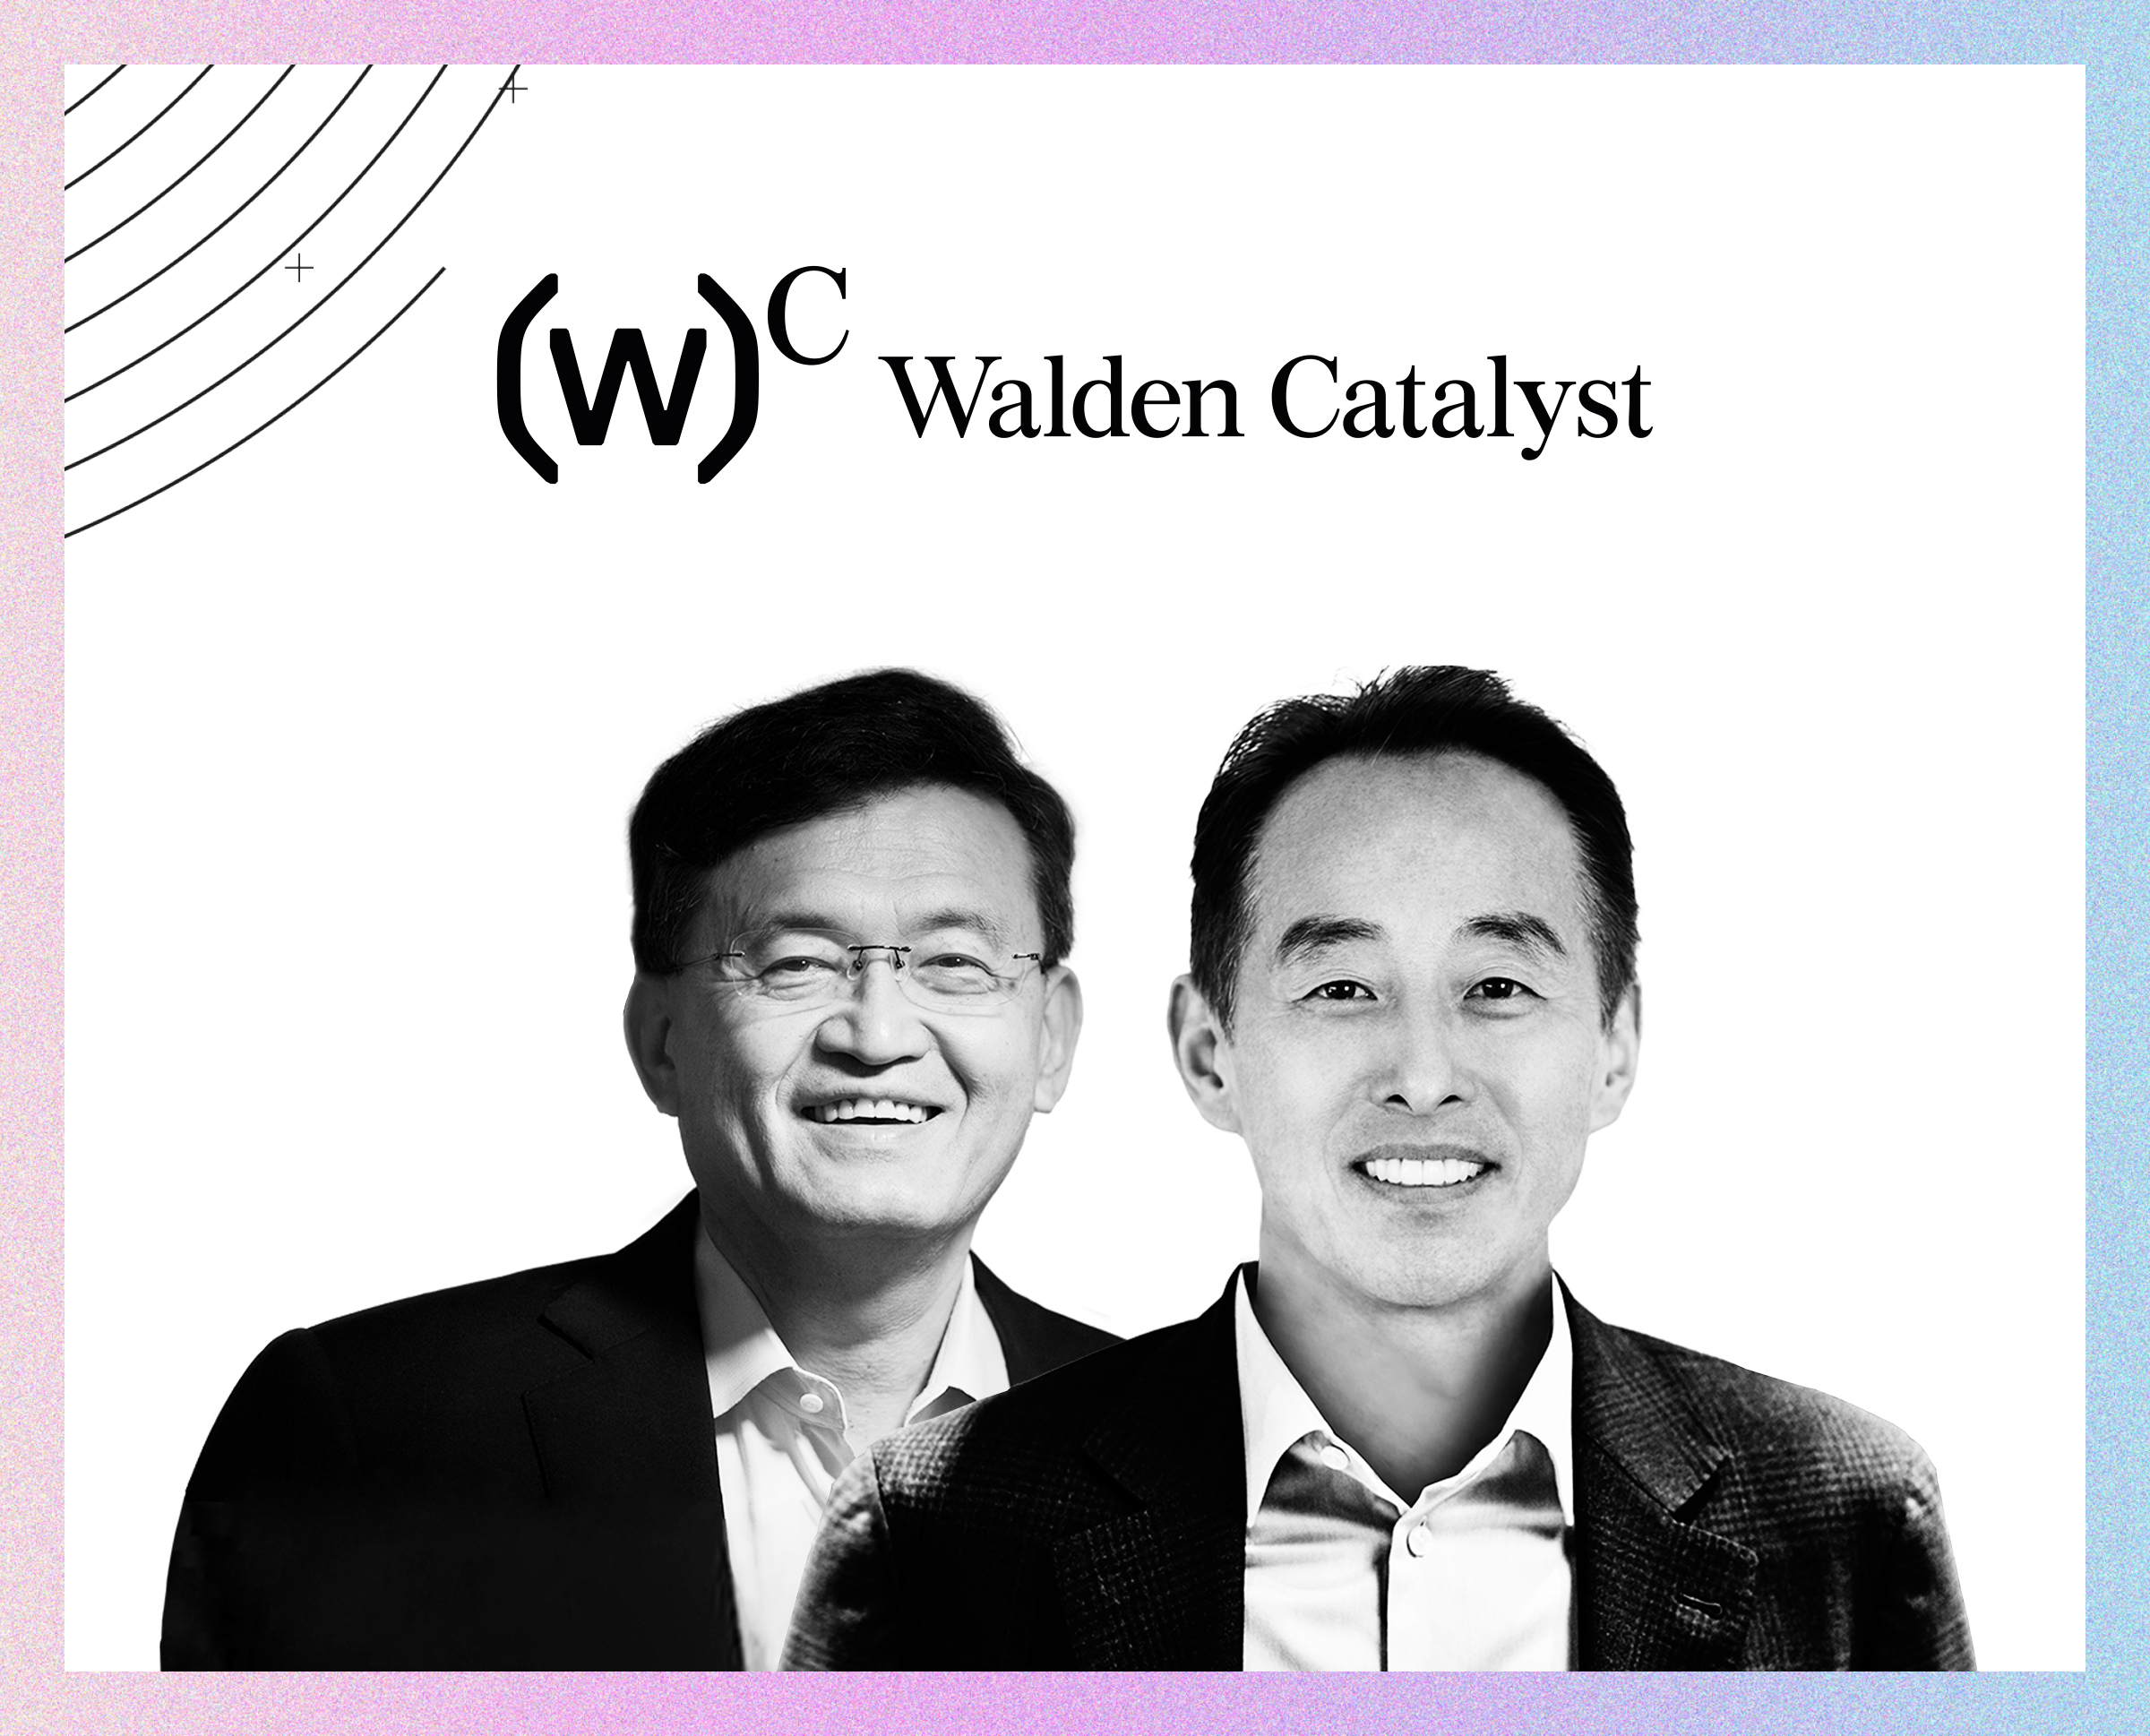 Walden Catalyst